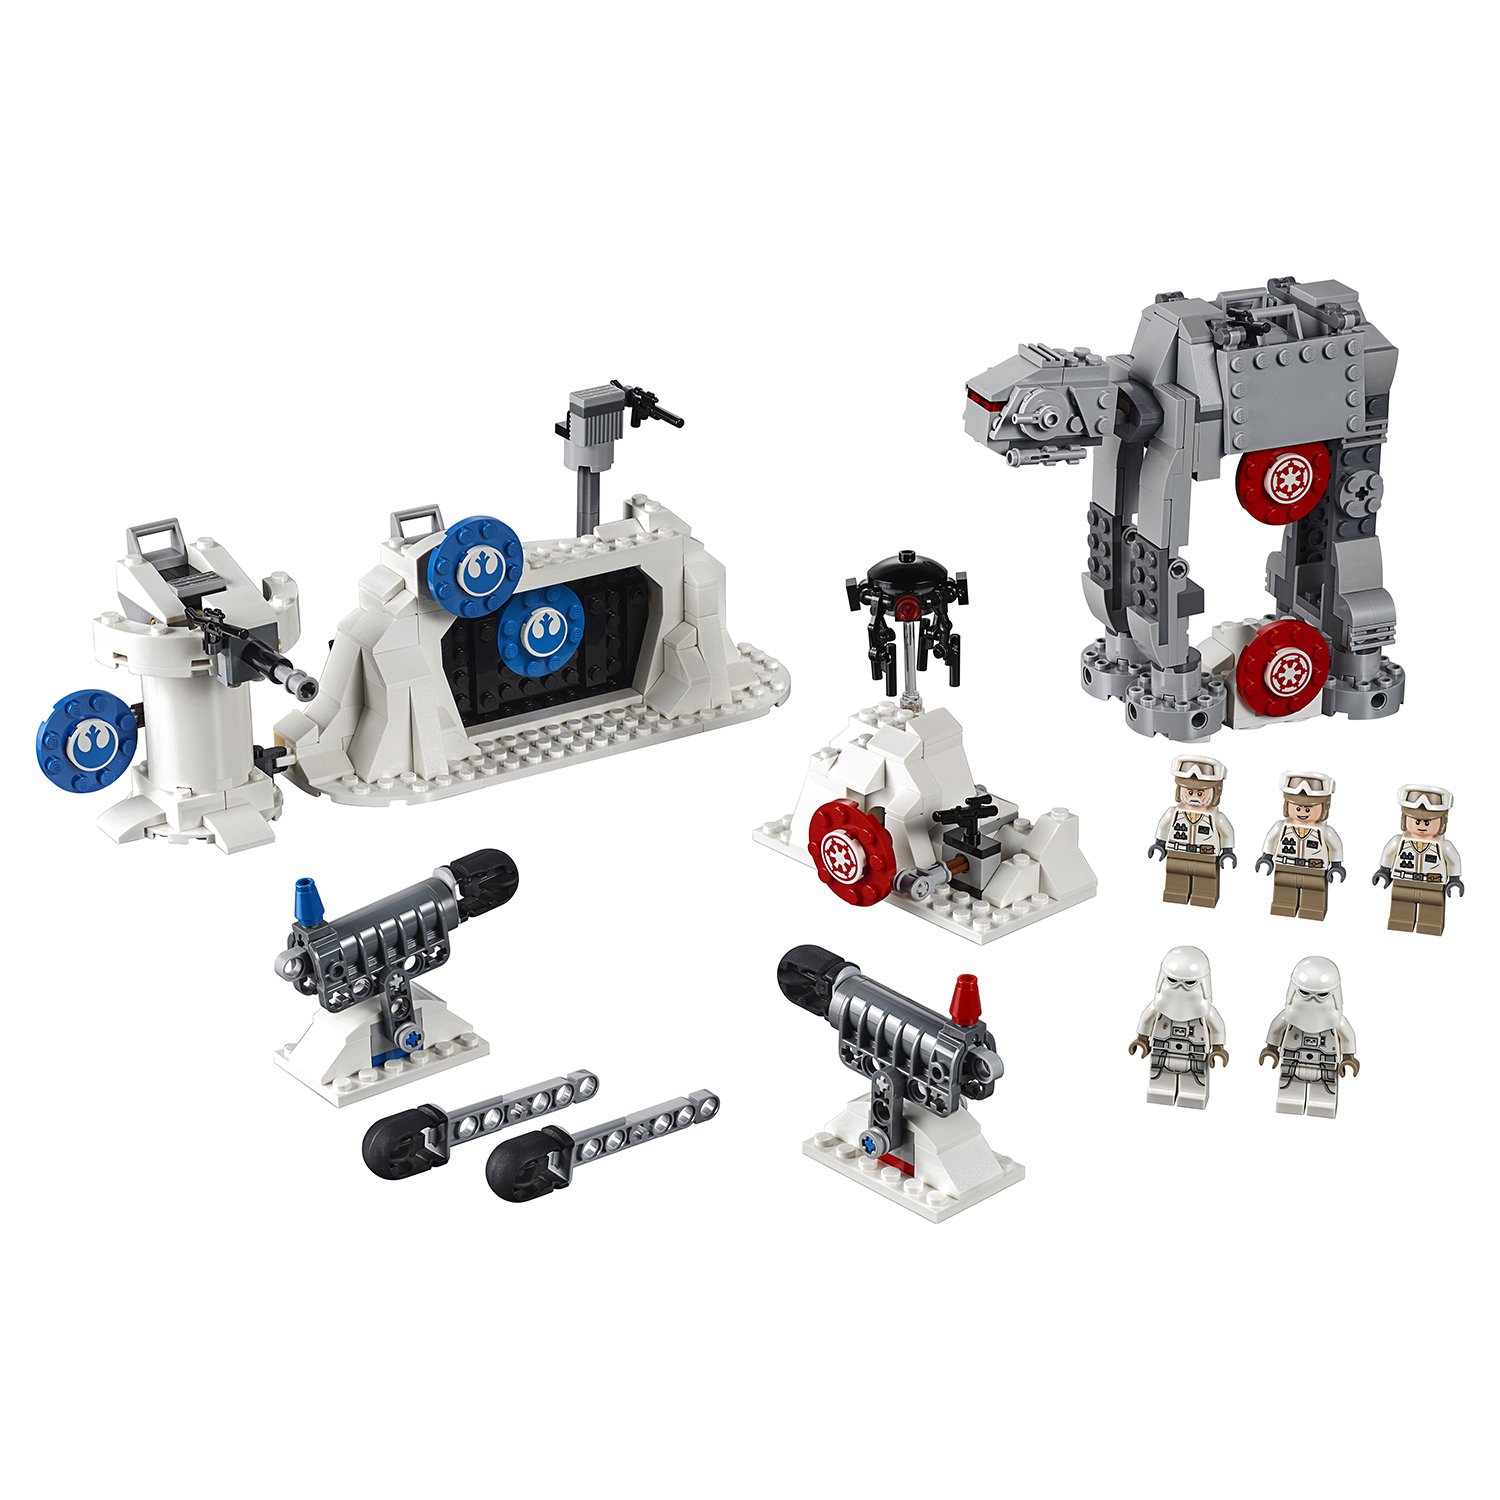 Lego Star Wars 75241 Защита базы Эхо